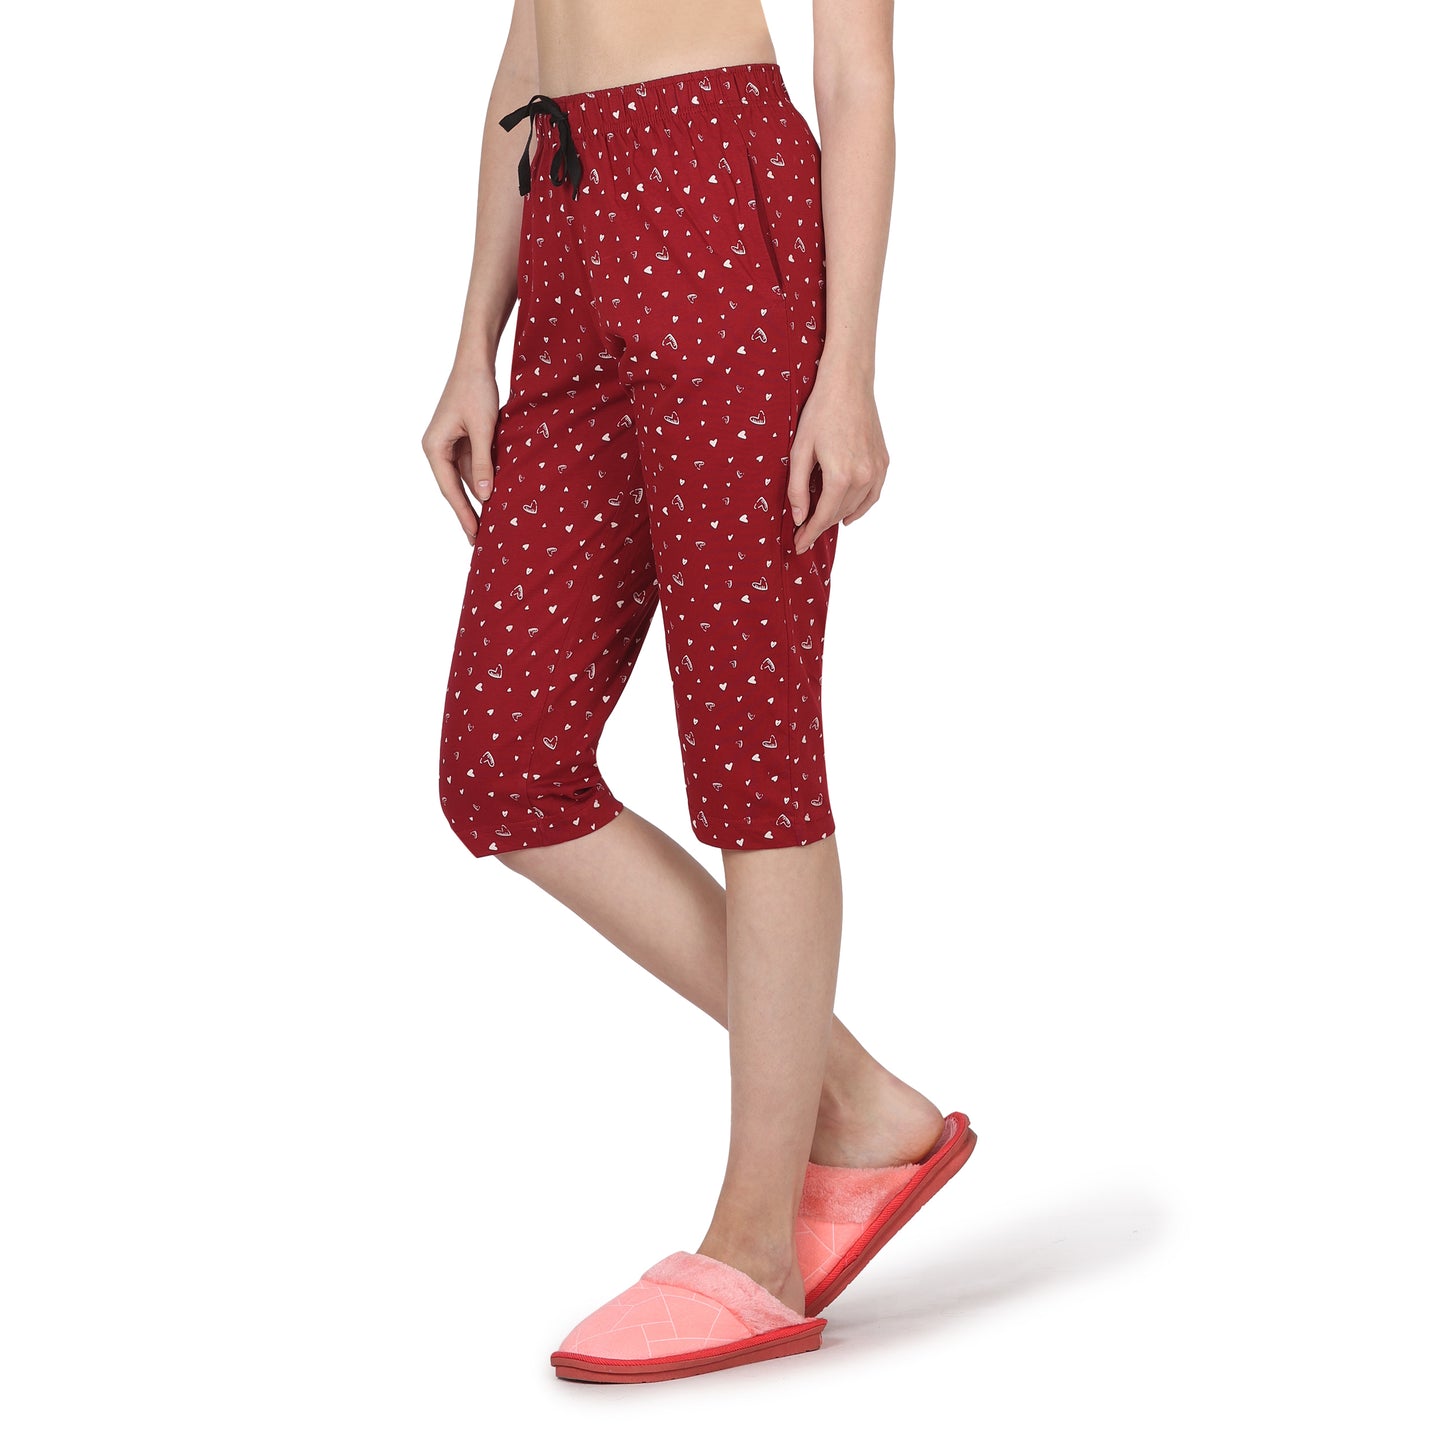 Eazy Women's Printed Capri Pants- Pack of 3- Black, Cherry Red & Navy Blue